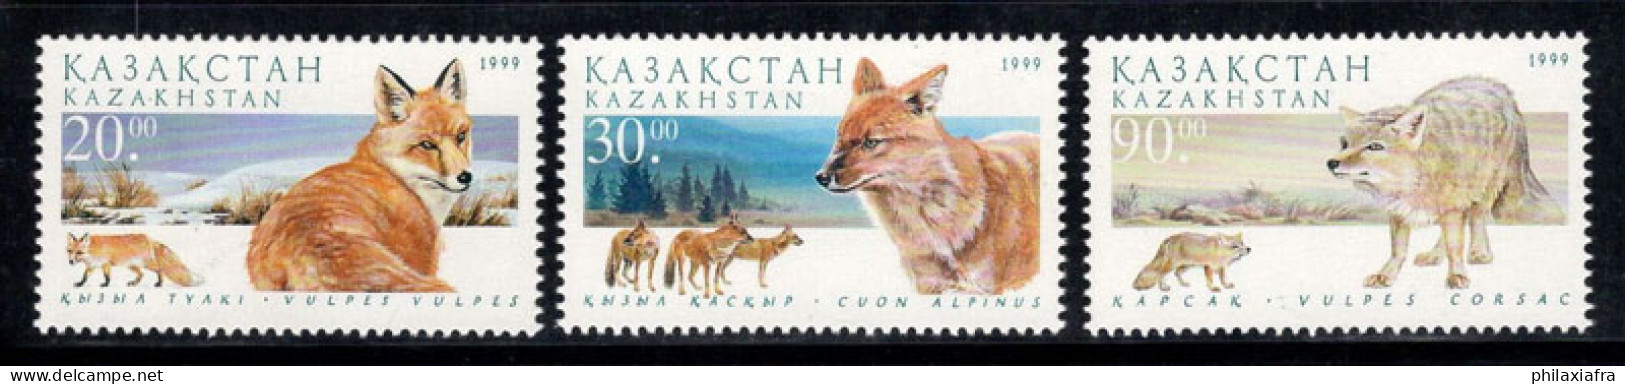 Kazakhstan 1999 Mi. 264-266 Neuf ** 100% Renard, Faune, Animaux - Kasachstan